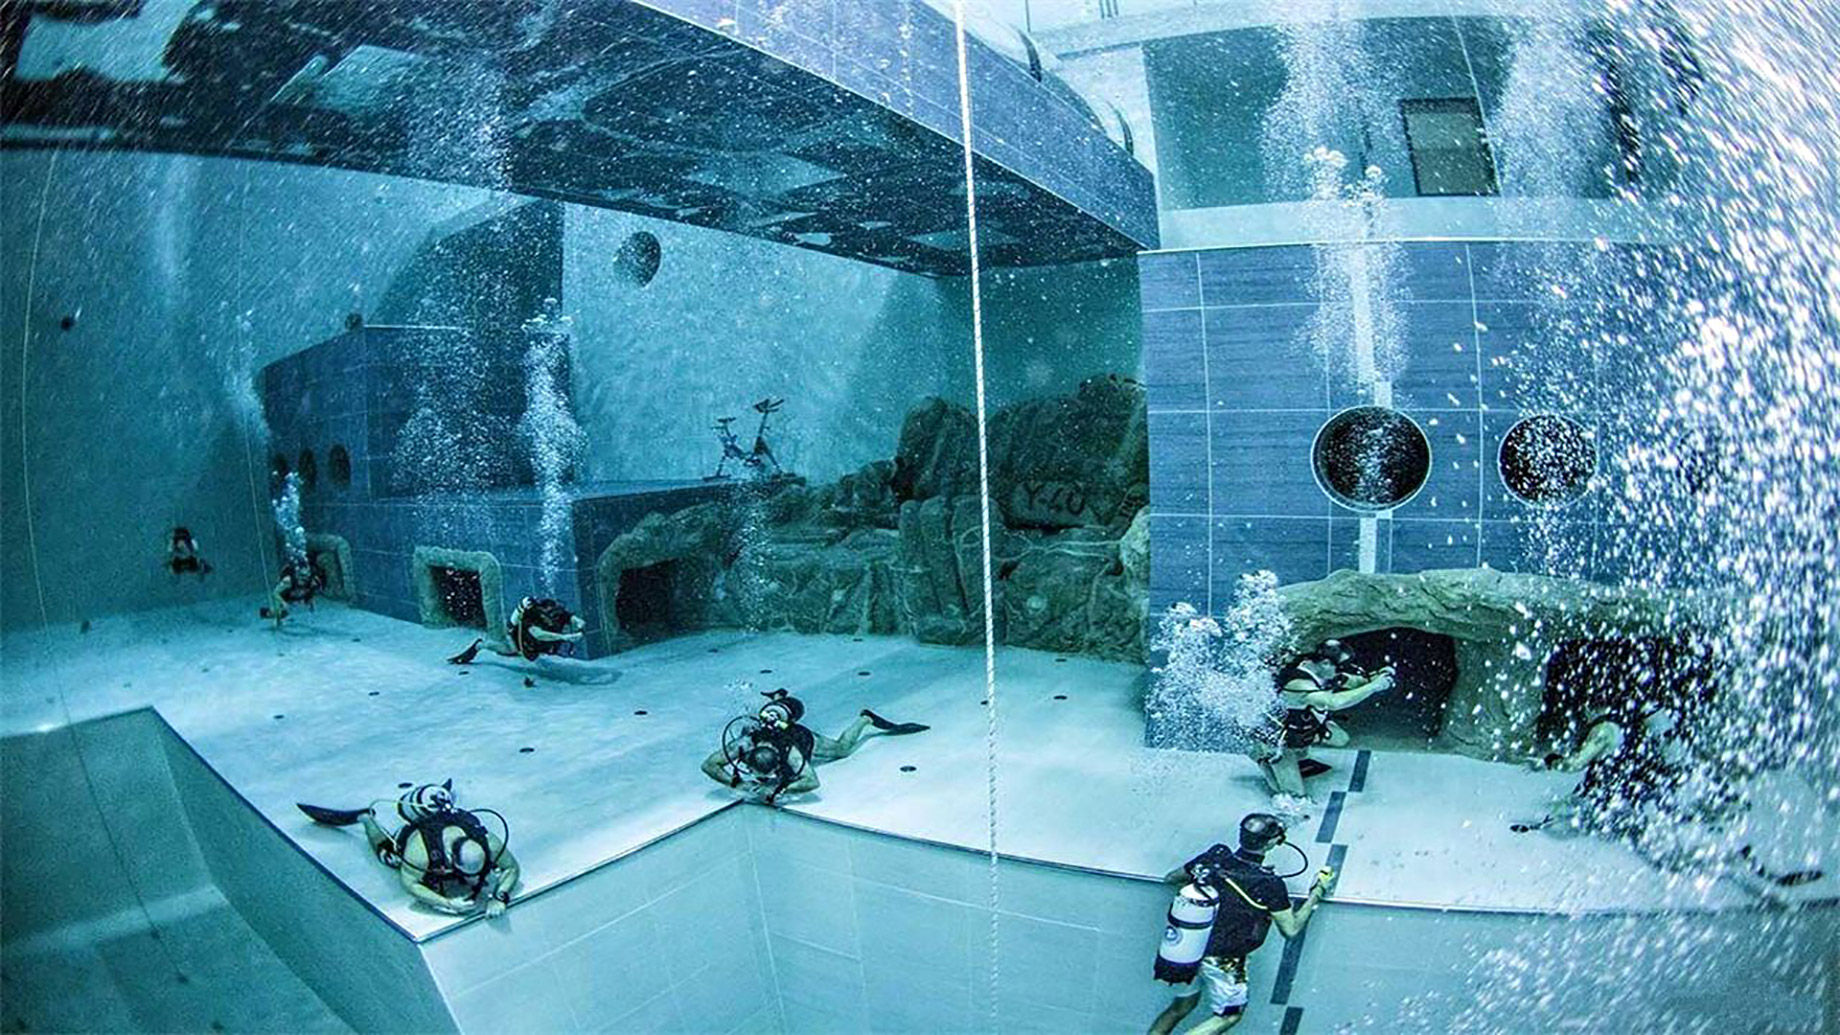 Emanuele Boaretto - Deepest Swimming Pool - Italy